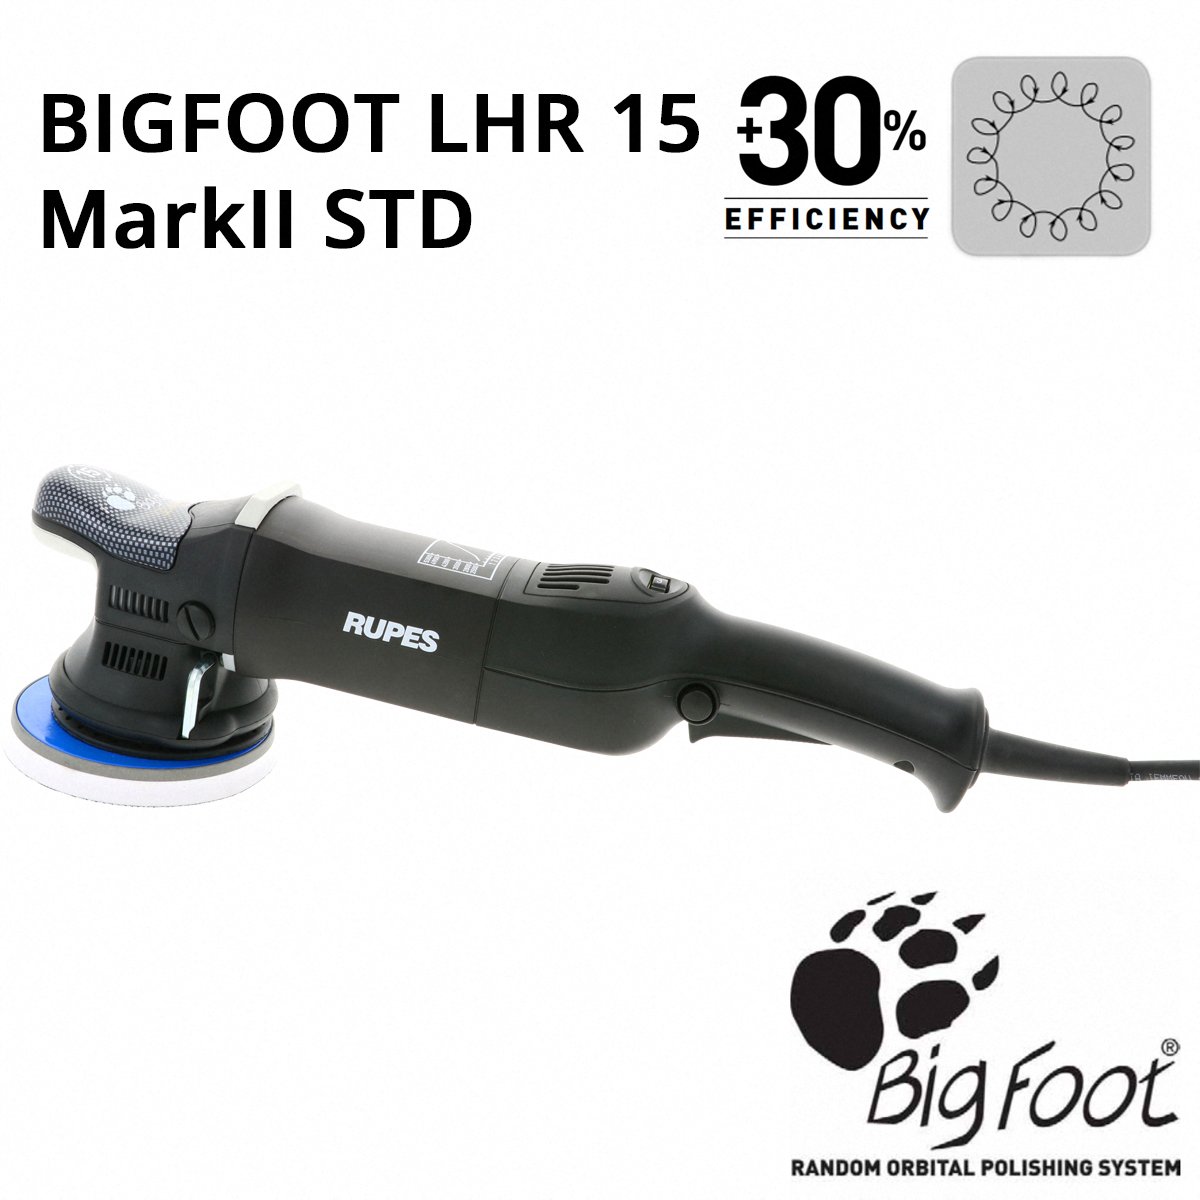 BigFoot LHR15 MarkII